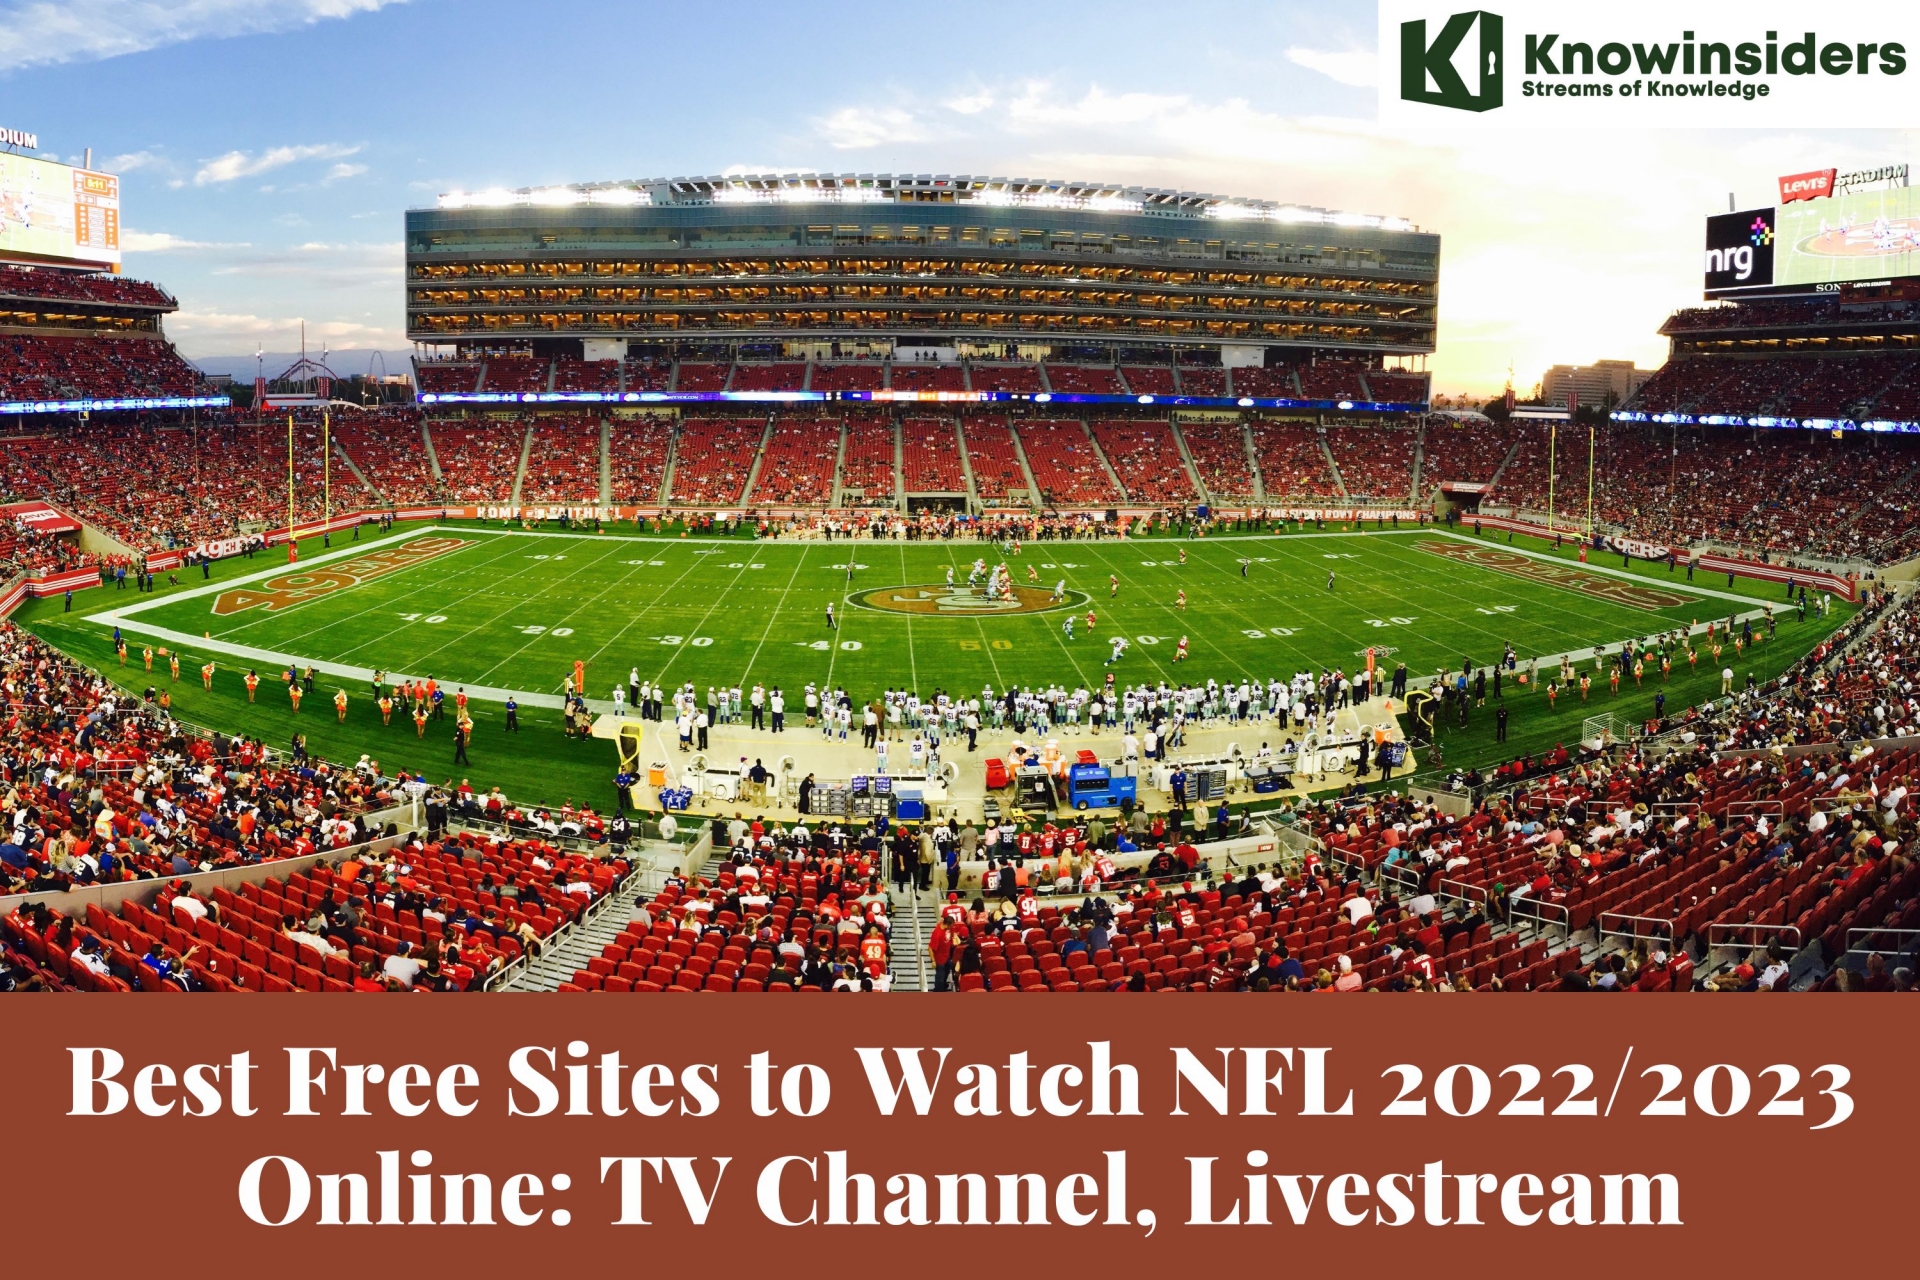 Best Free Sites to Watch NFL 2022/2023 Online: TV Channel, Livestream